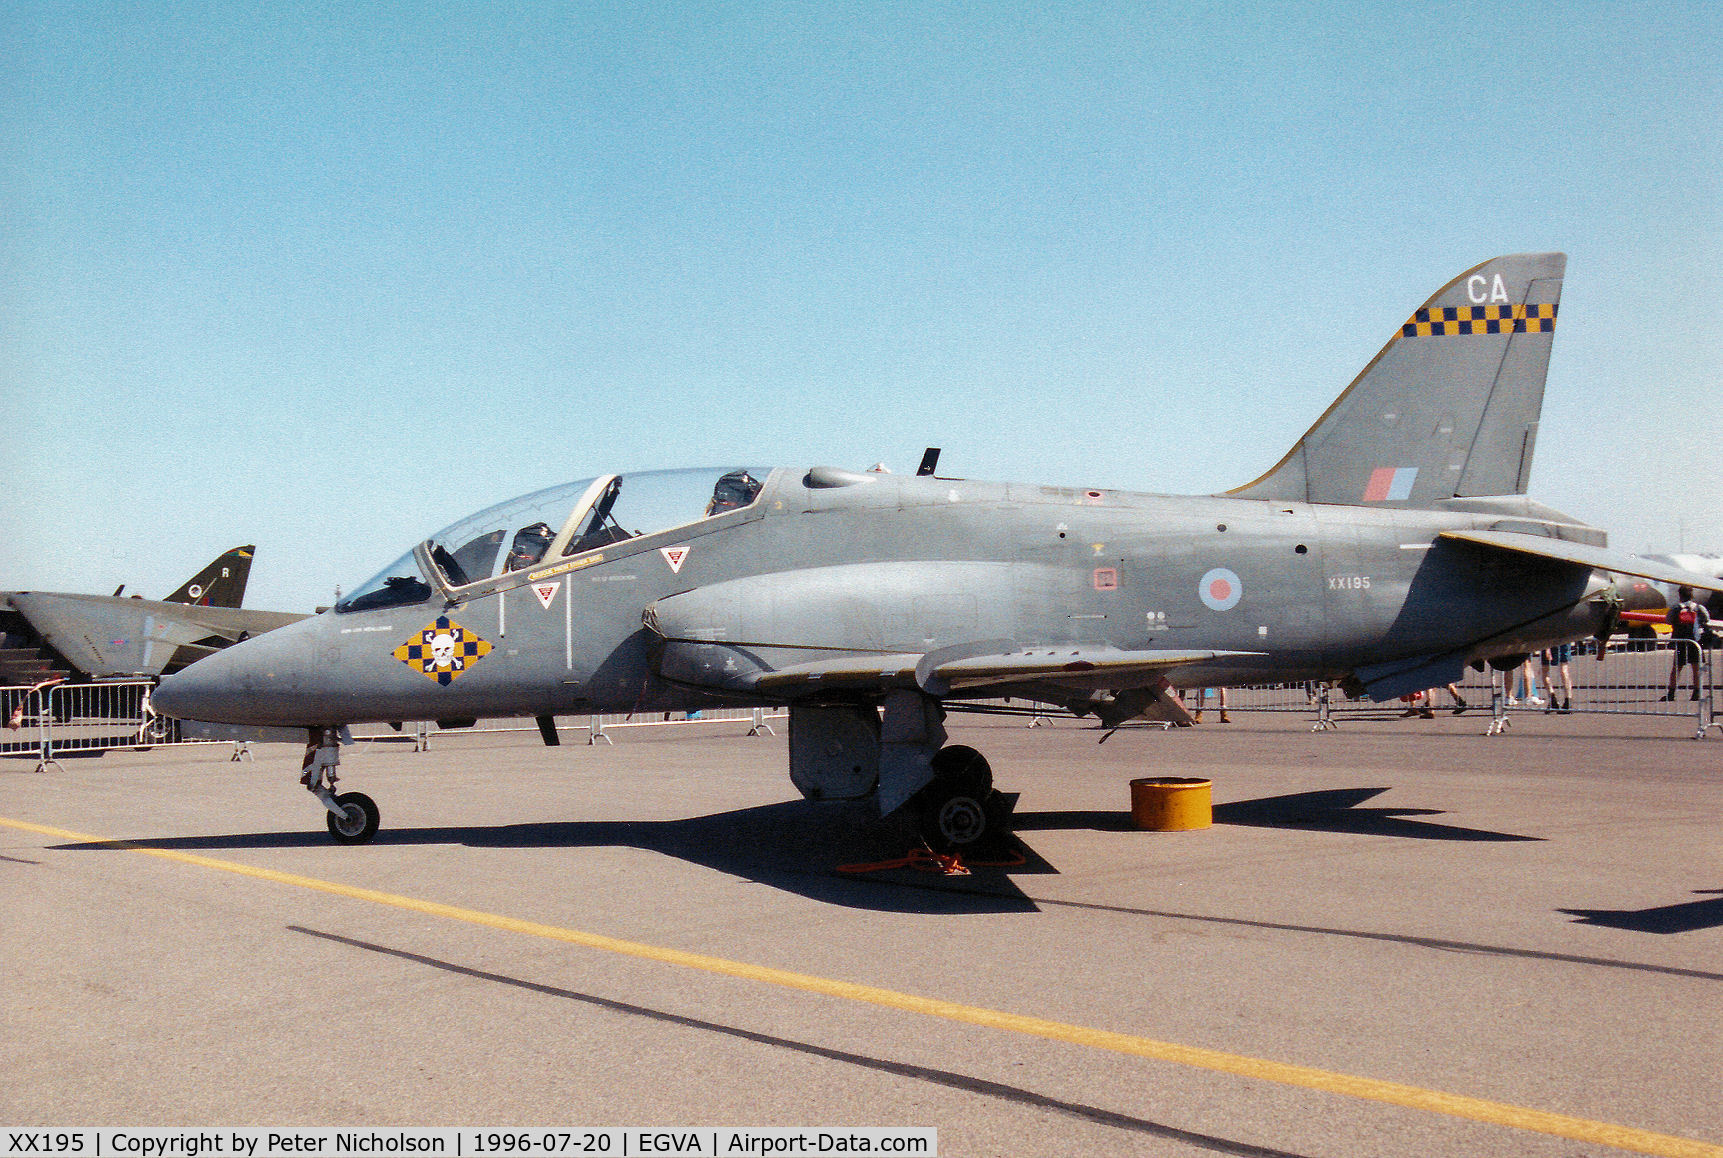 XX195, 1978 Hawker Siddeley Hawk T.1 C/N 042/312042, Hawk T.1A of 100 Squadron at RAF Leeming on display at the 1996 Royal Intnl Air Tattoo at RAF Fairford.